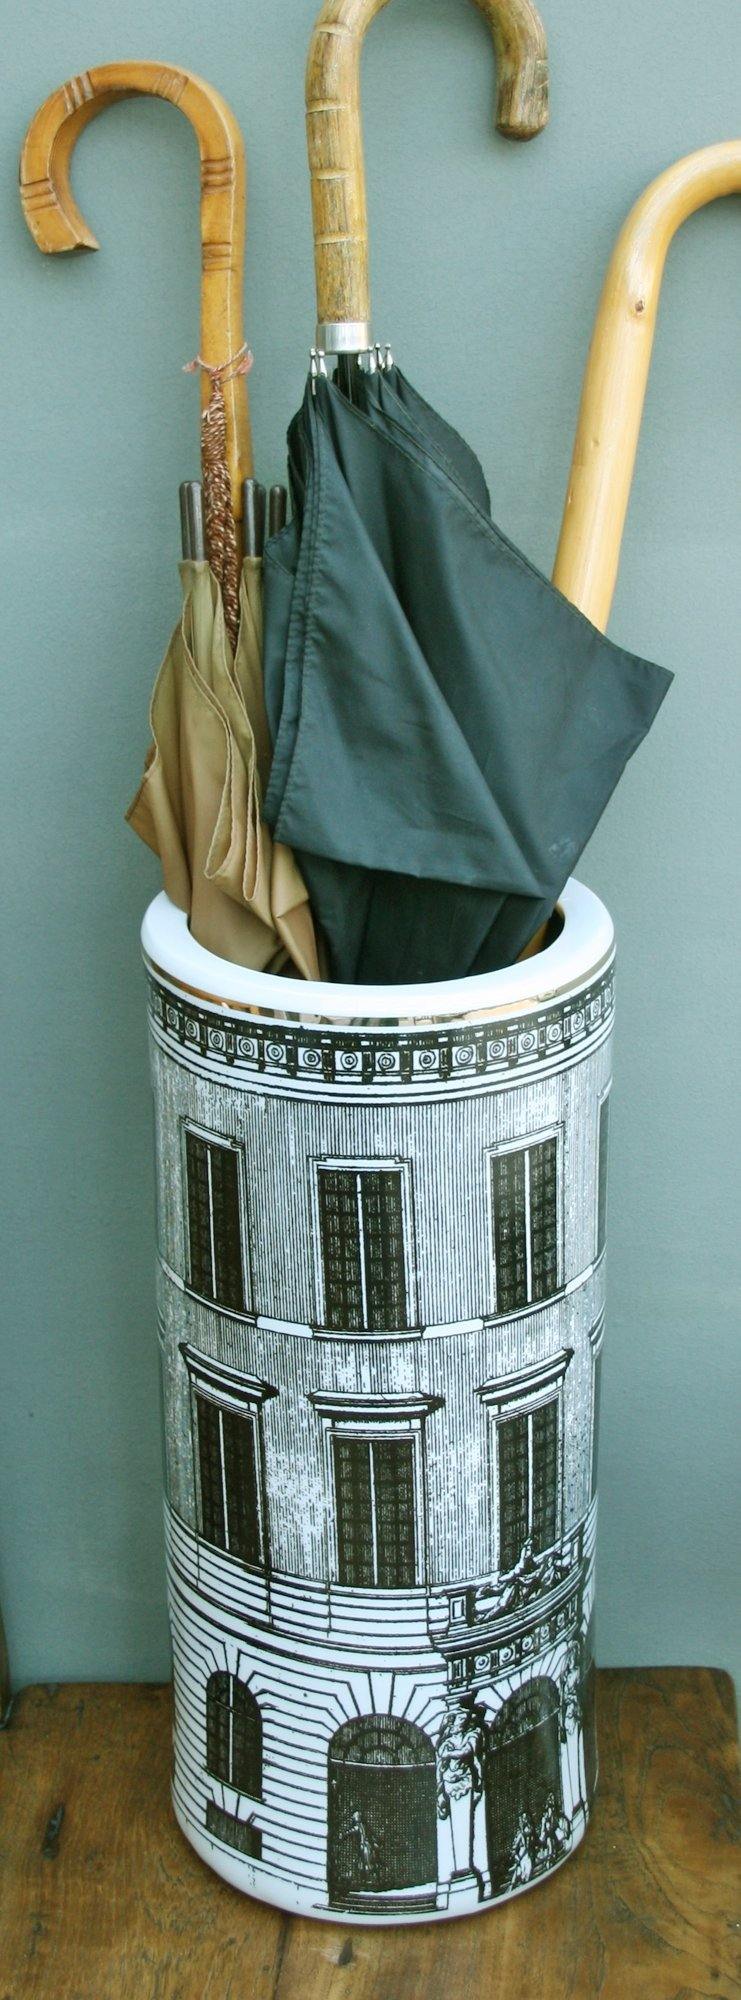 Ceramic Umbrella Stand, Monochrome Building Design - Kporium Home & Garden